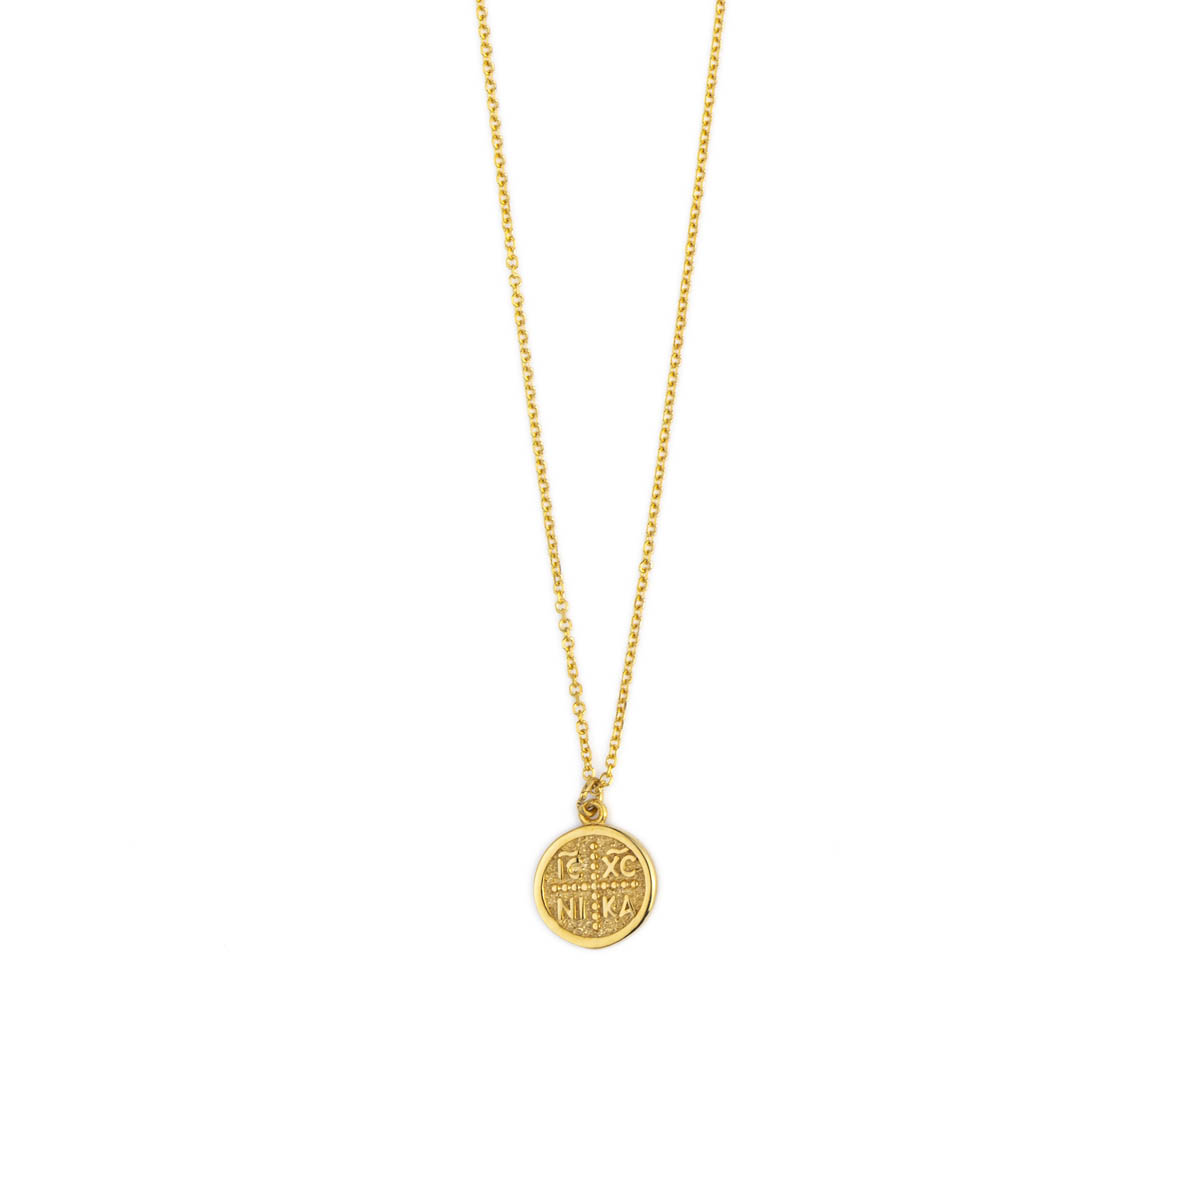 Constantinato Necklace - 14K Gold